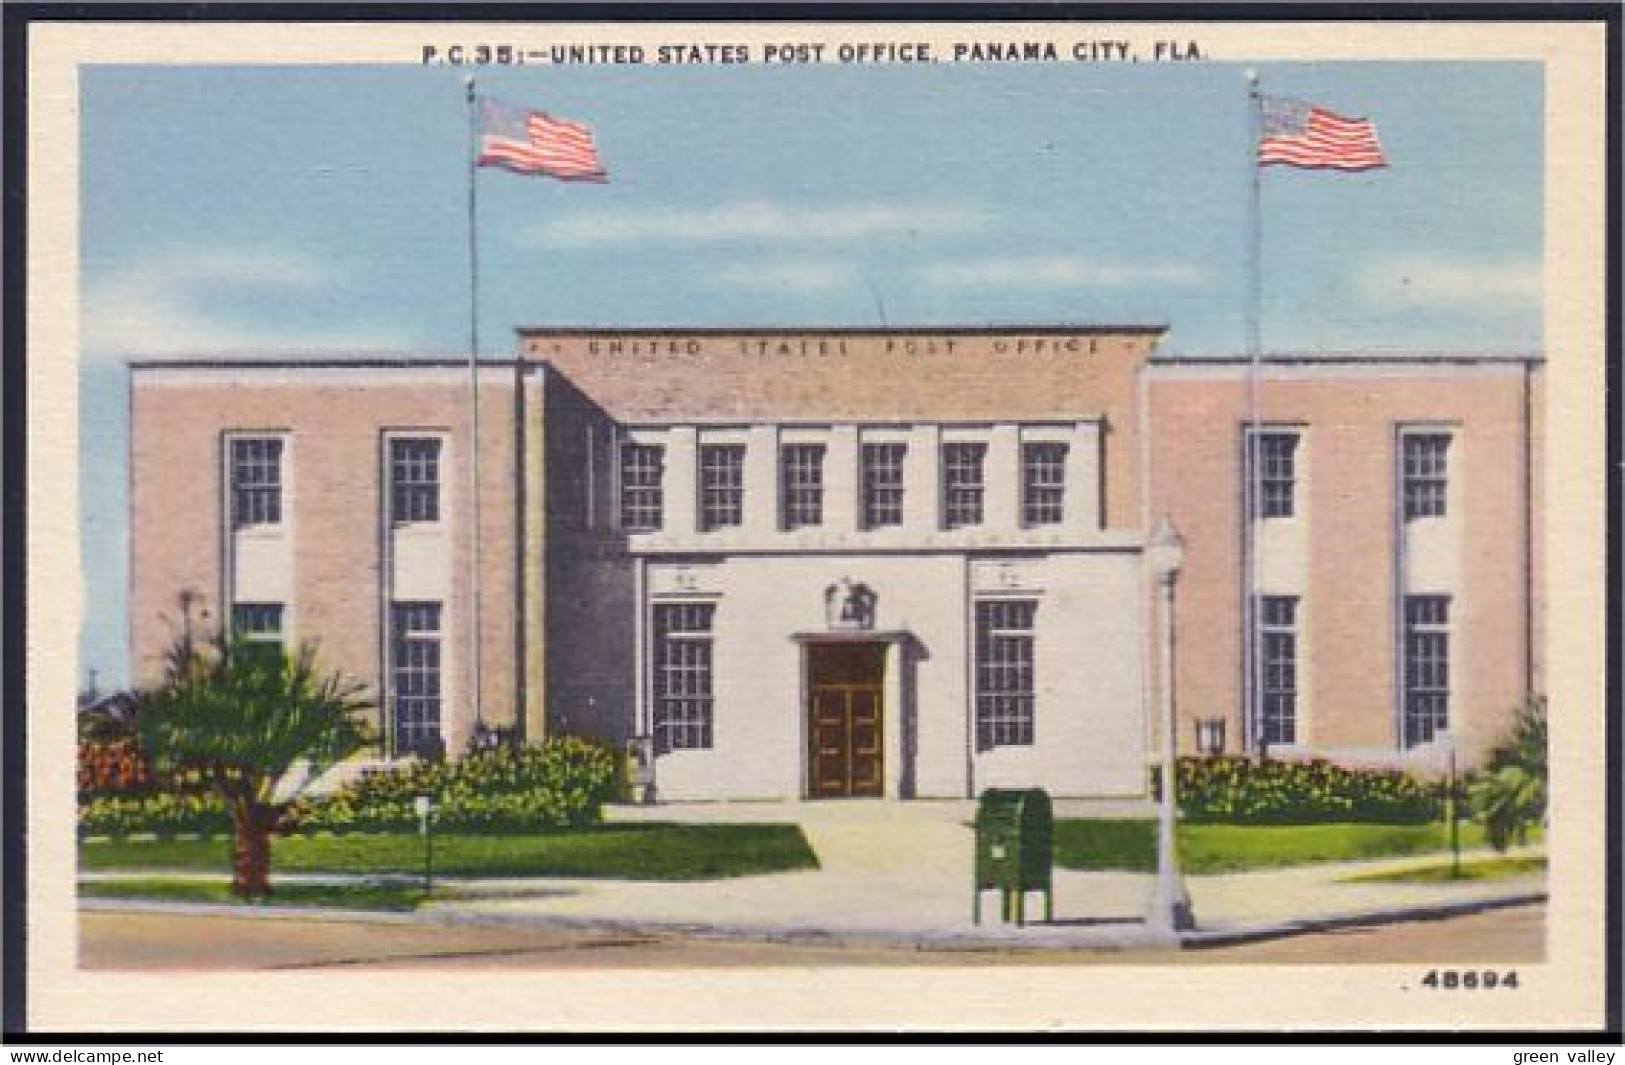 A45 492 PC US Post Office Panama City Unused - Panamá City